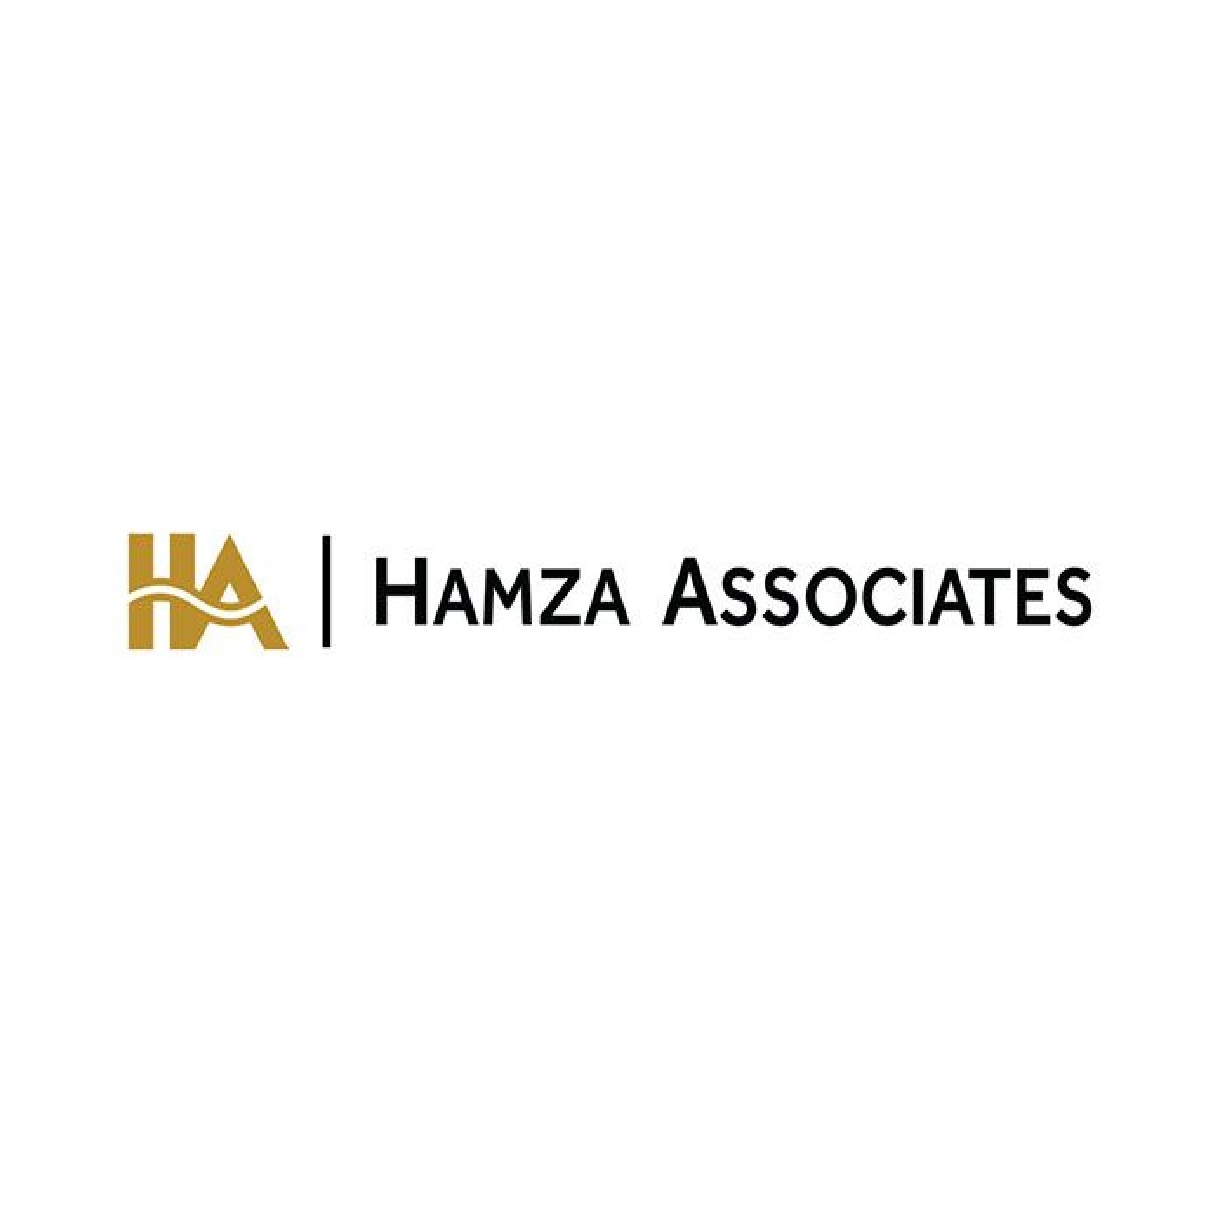 Hamza Associates